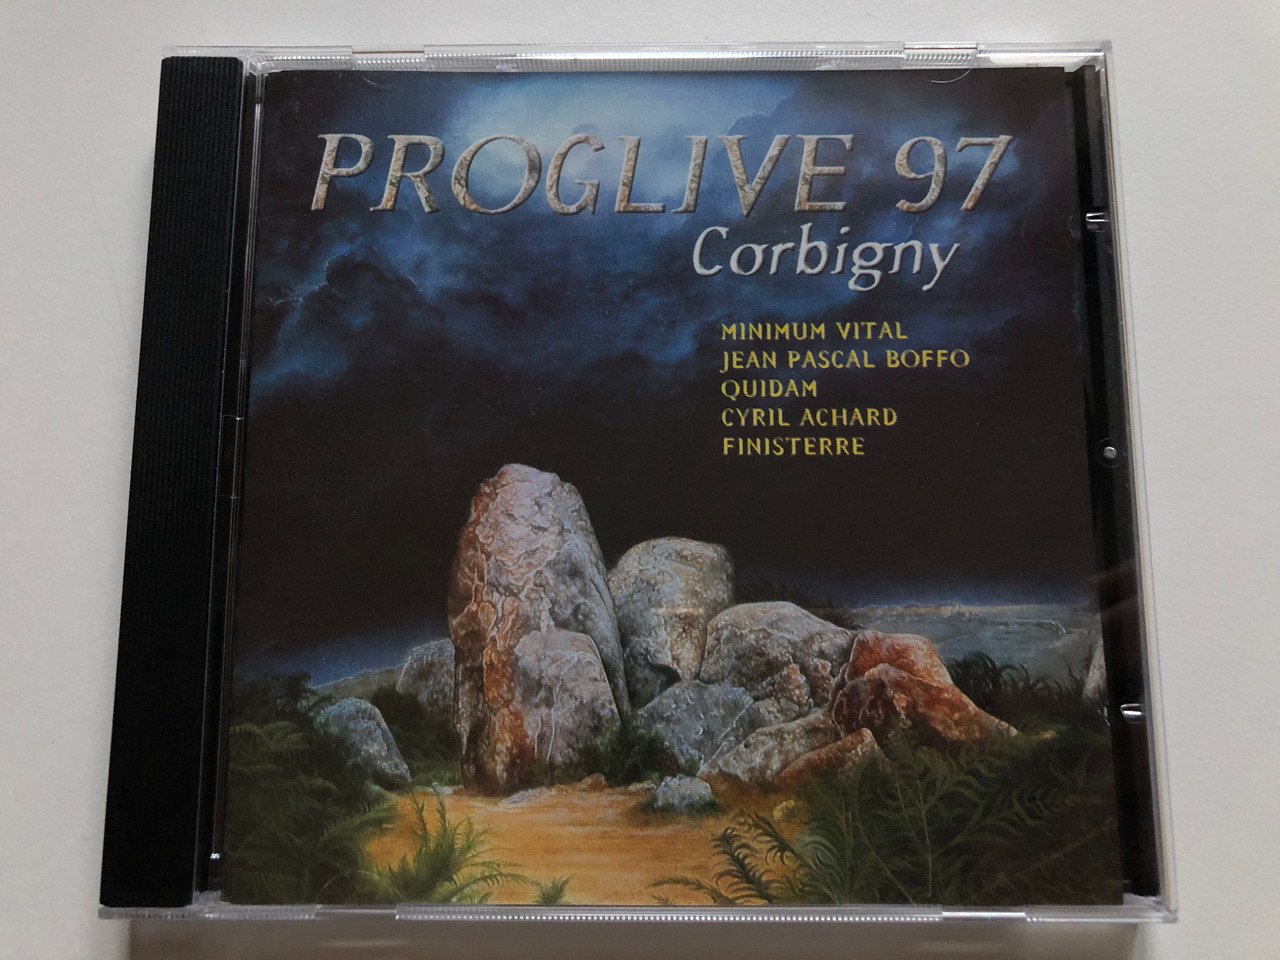 Proglive 97 Corbigny / Minimum Vital, Jean Pascal Boffo, Quidam, Cyril  Achard, Finisterre / Musea Audio CD 1997 / FGBG 4237.AR - Bible in My  Language